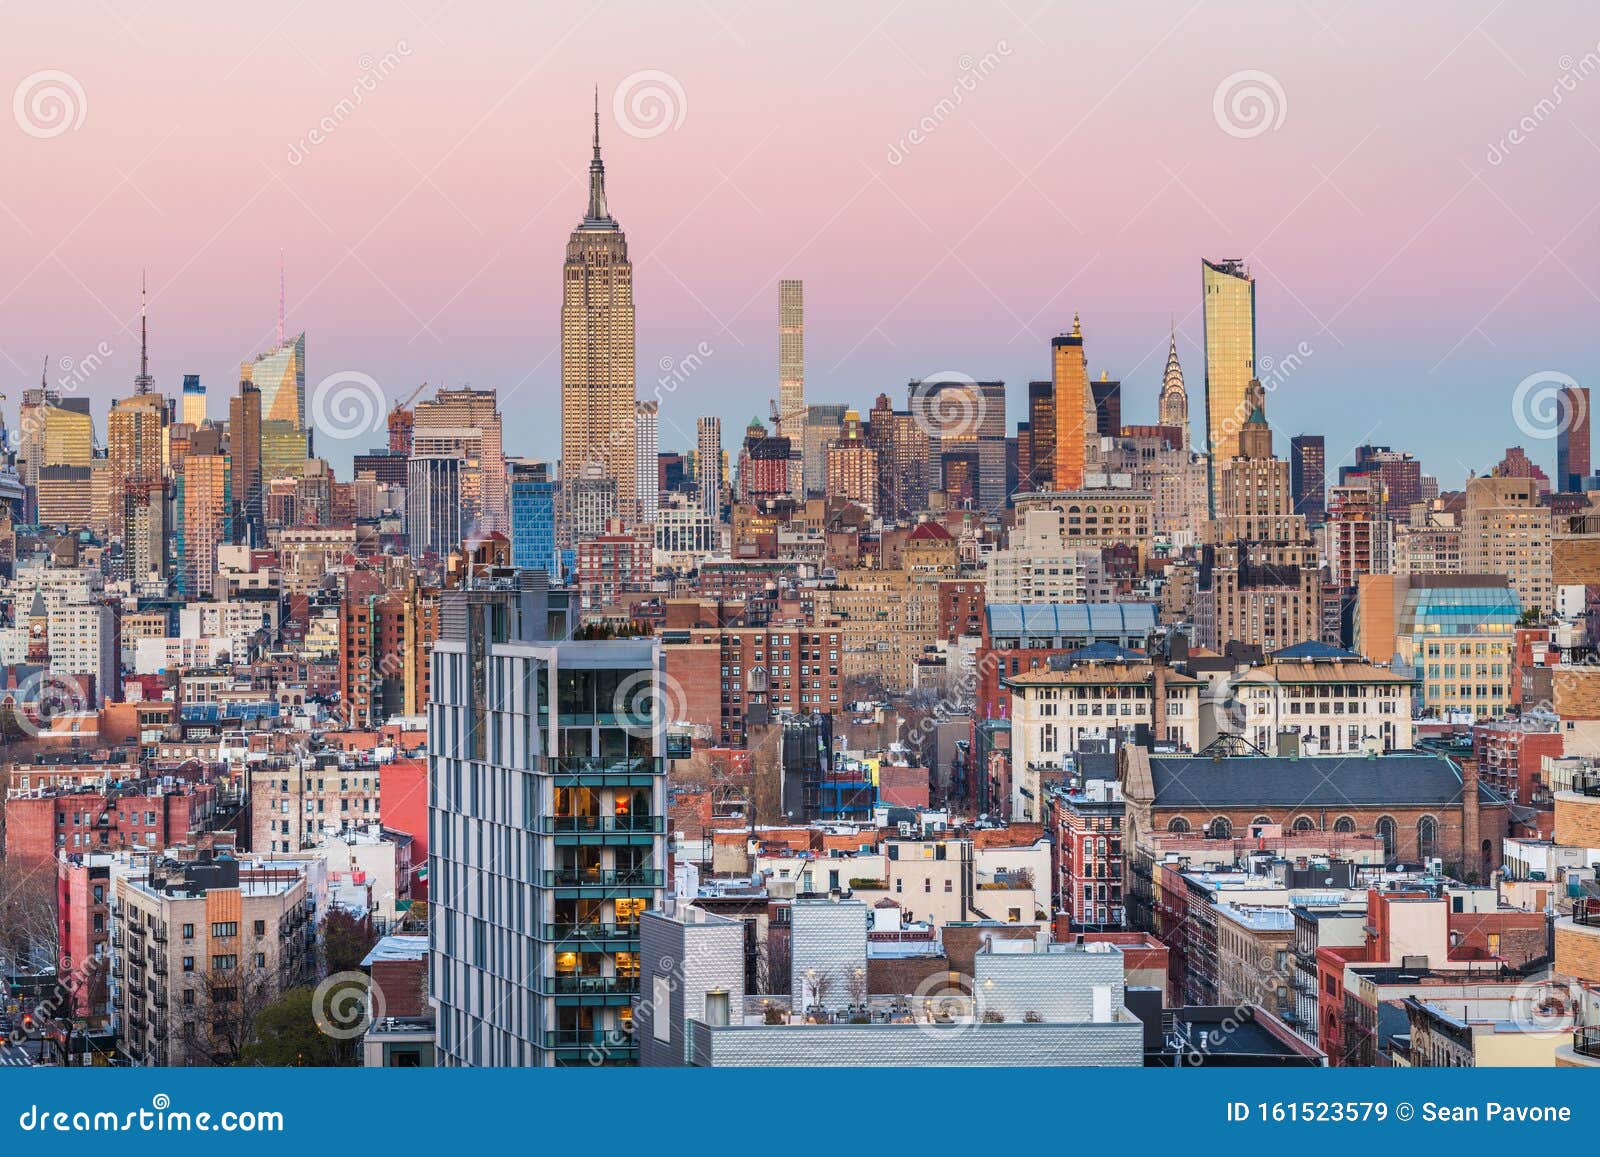 new york city midtown manhattan skyline